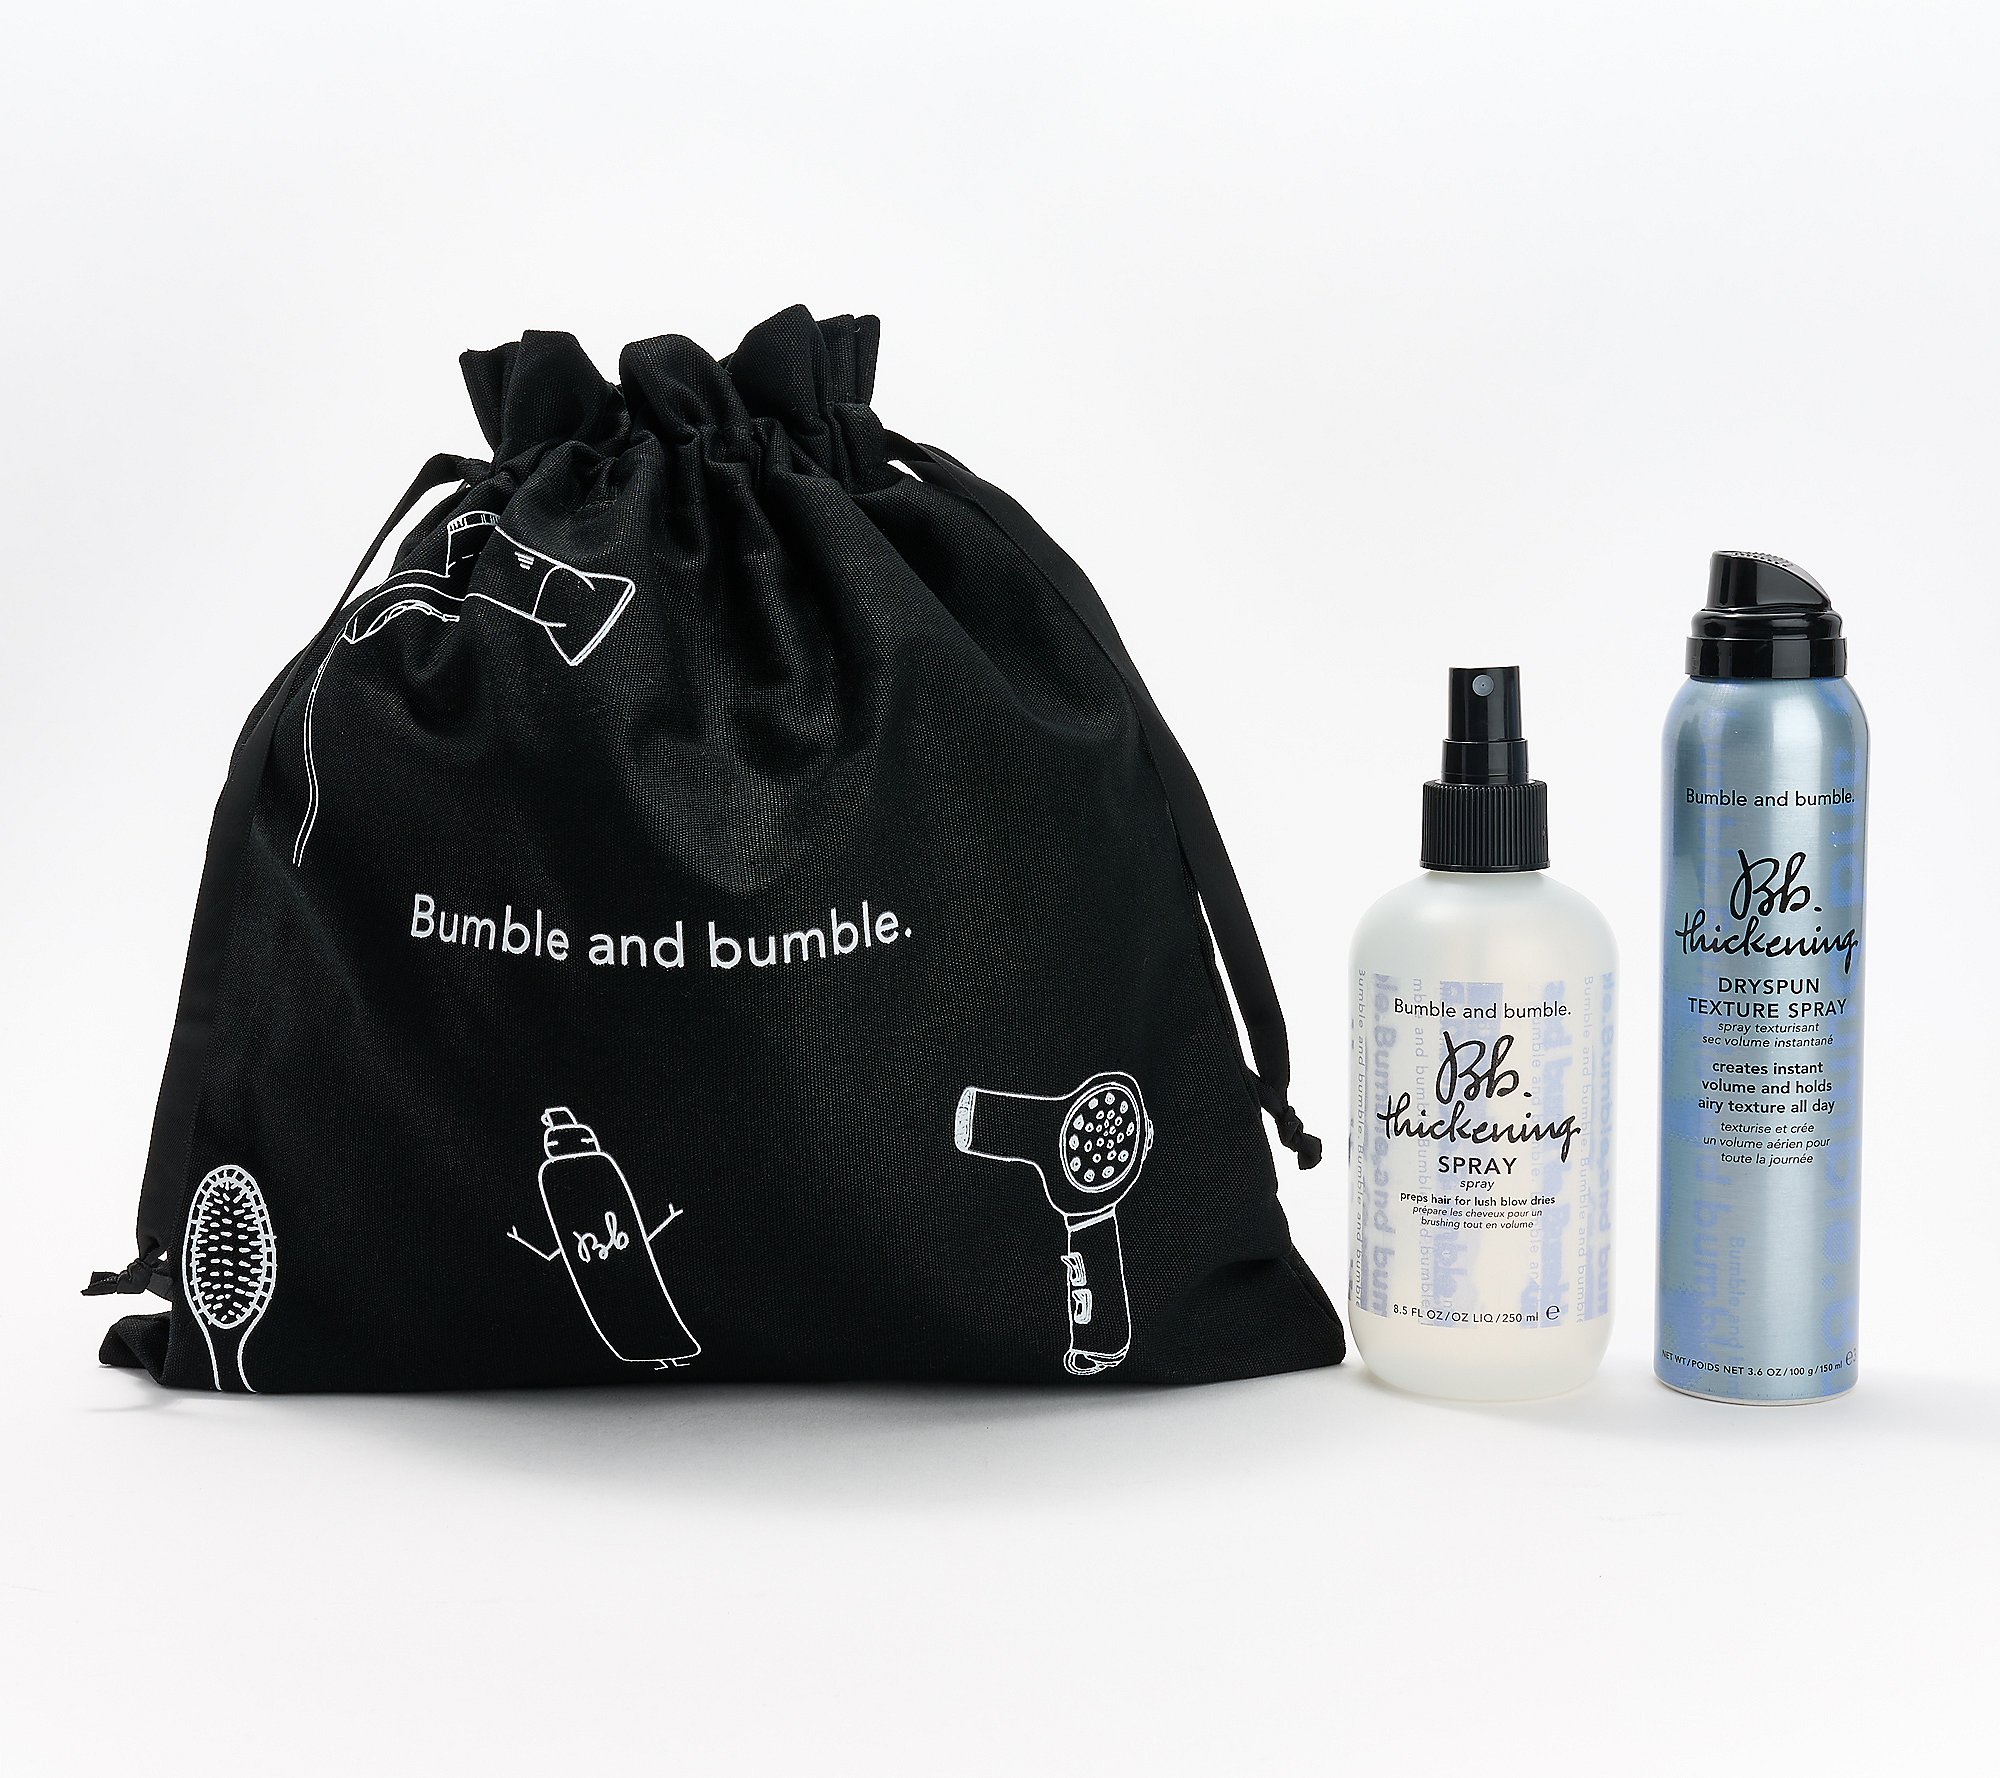 Bumble and bumble. Thickening Dryspun + Spray Gift Set